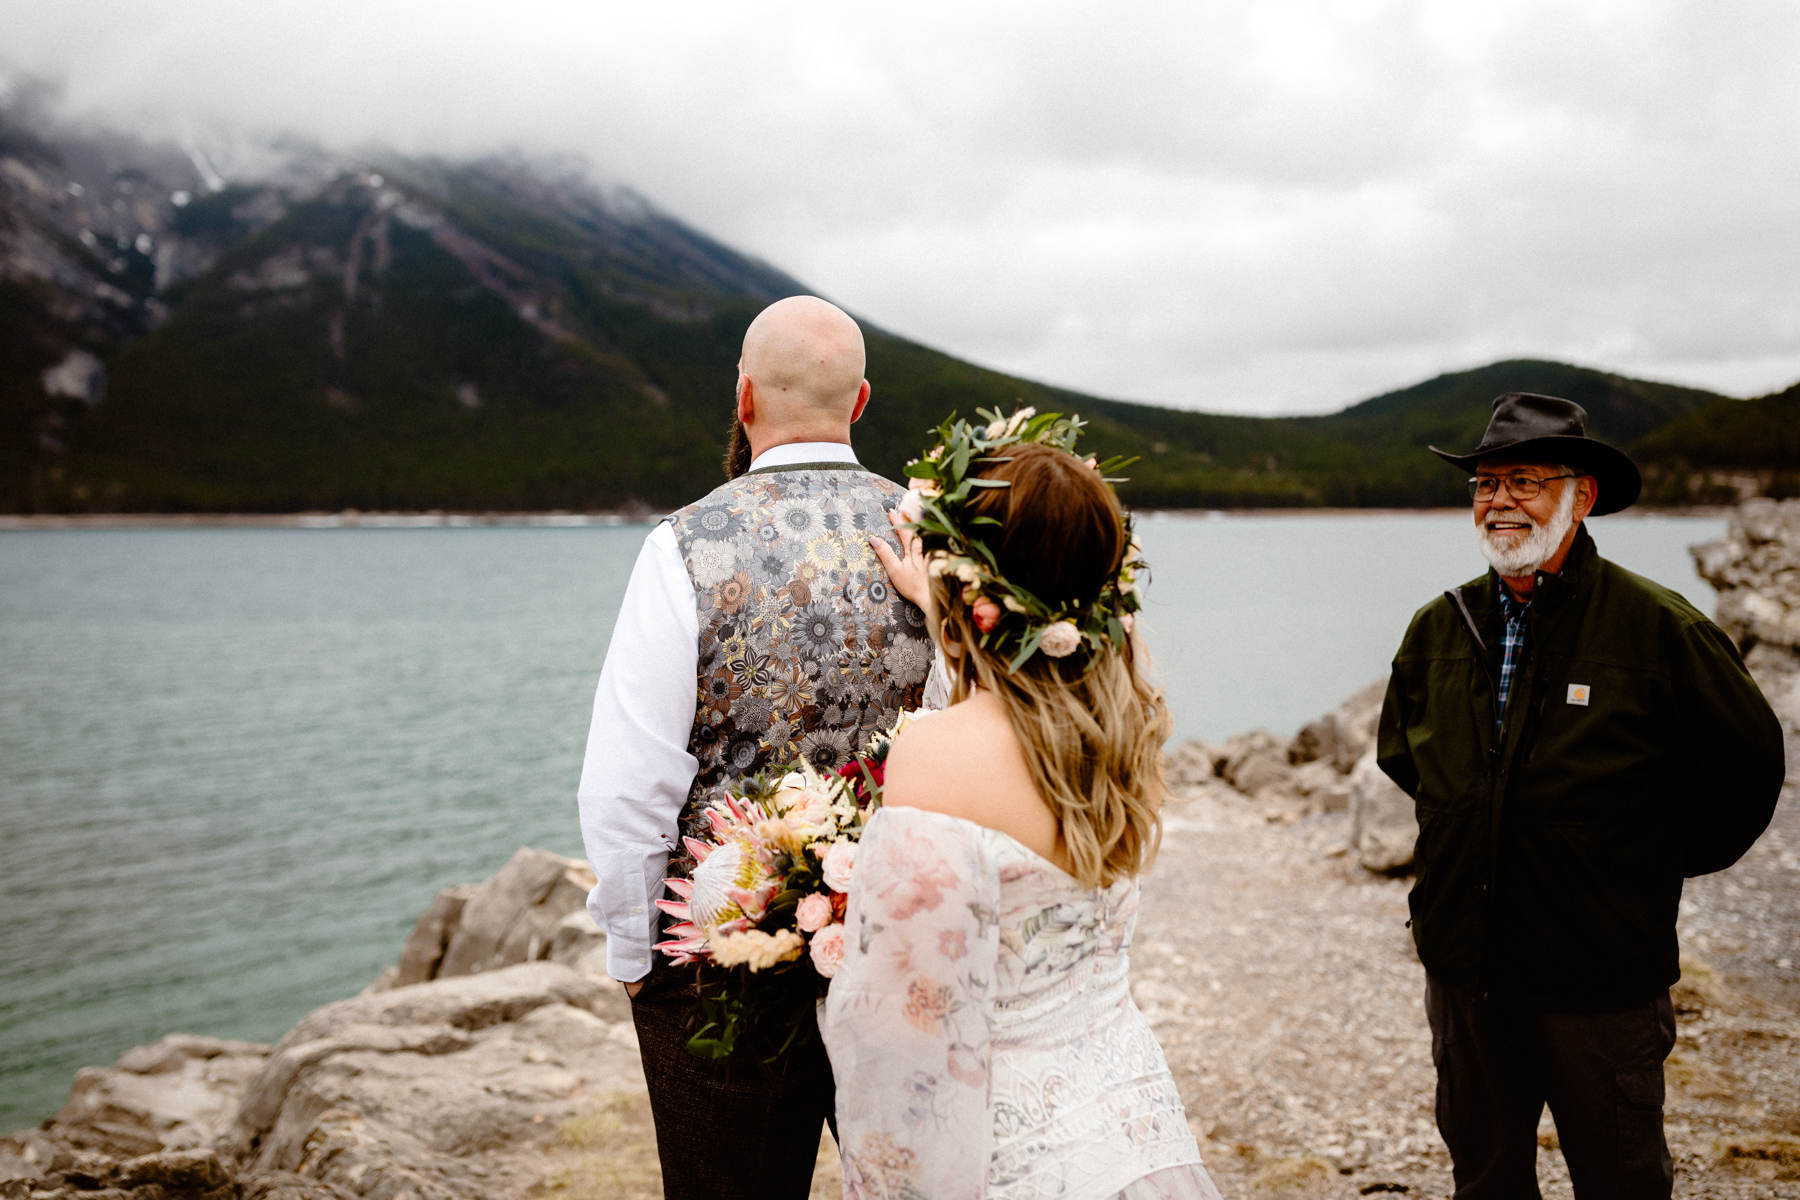 Stormy and Rainy Banff Wedding Photography - Photo 5